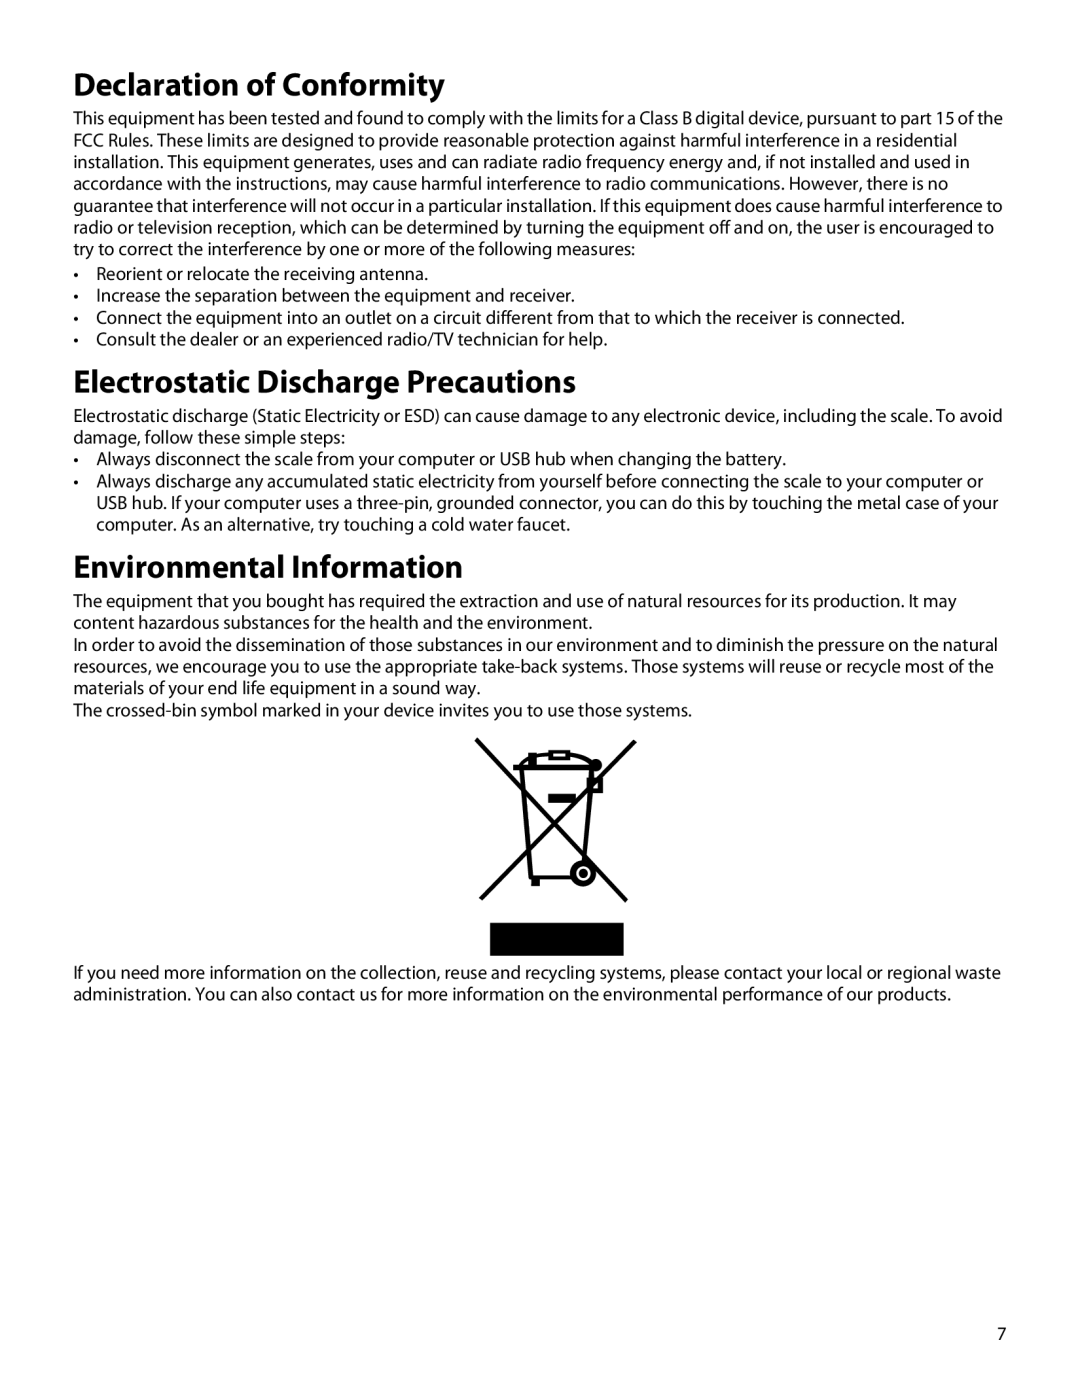 Dymo S400, S250, S100 manual Declaration of Conformity, Electrostatic Discharge Precautions, Environmental Information 